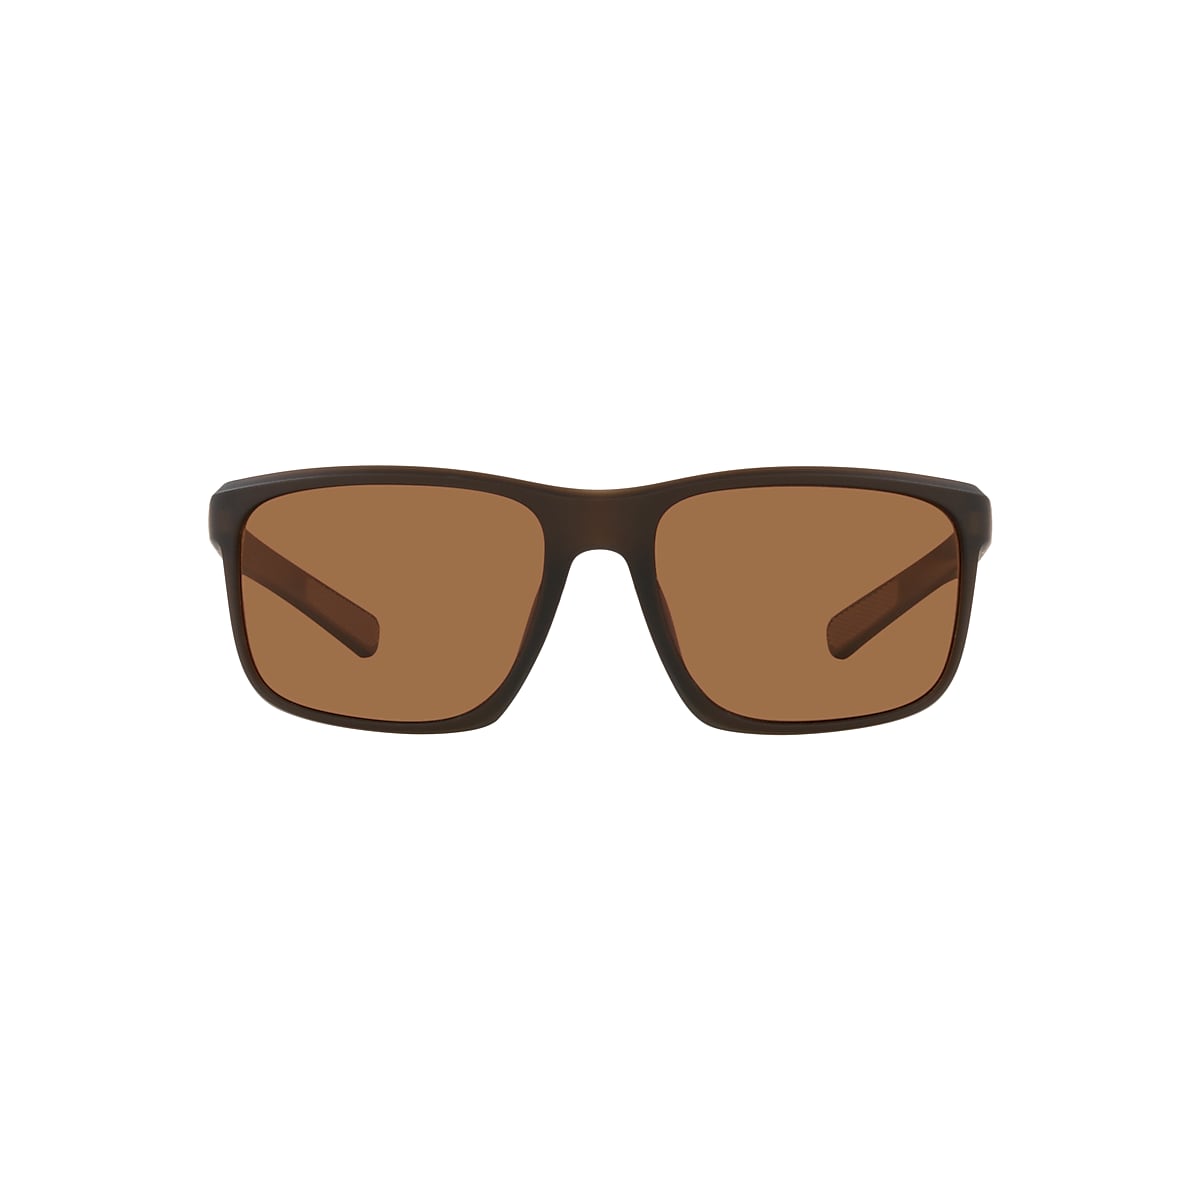 BRS3 Frameless Sunglasses – Bont Rowing